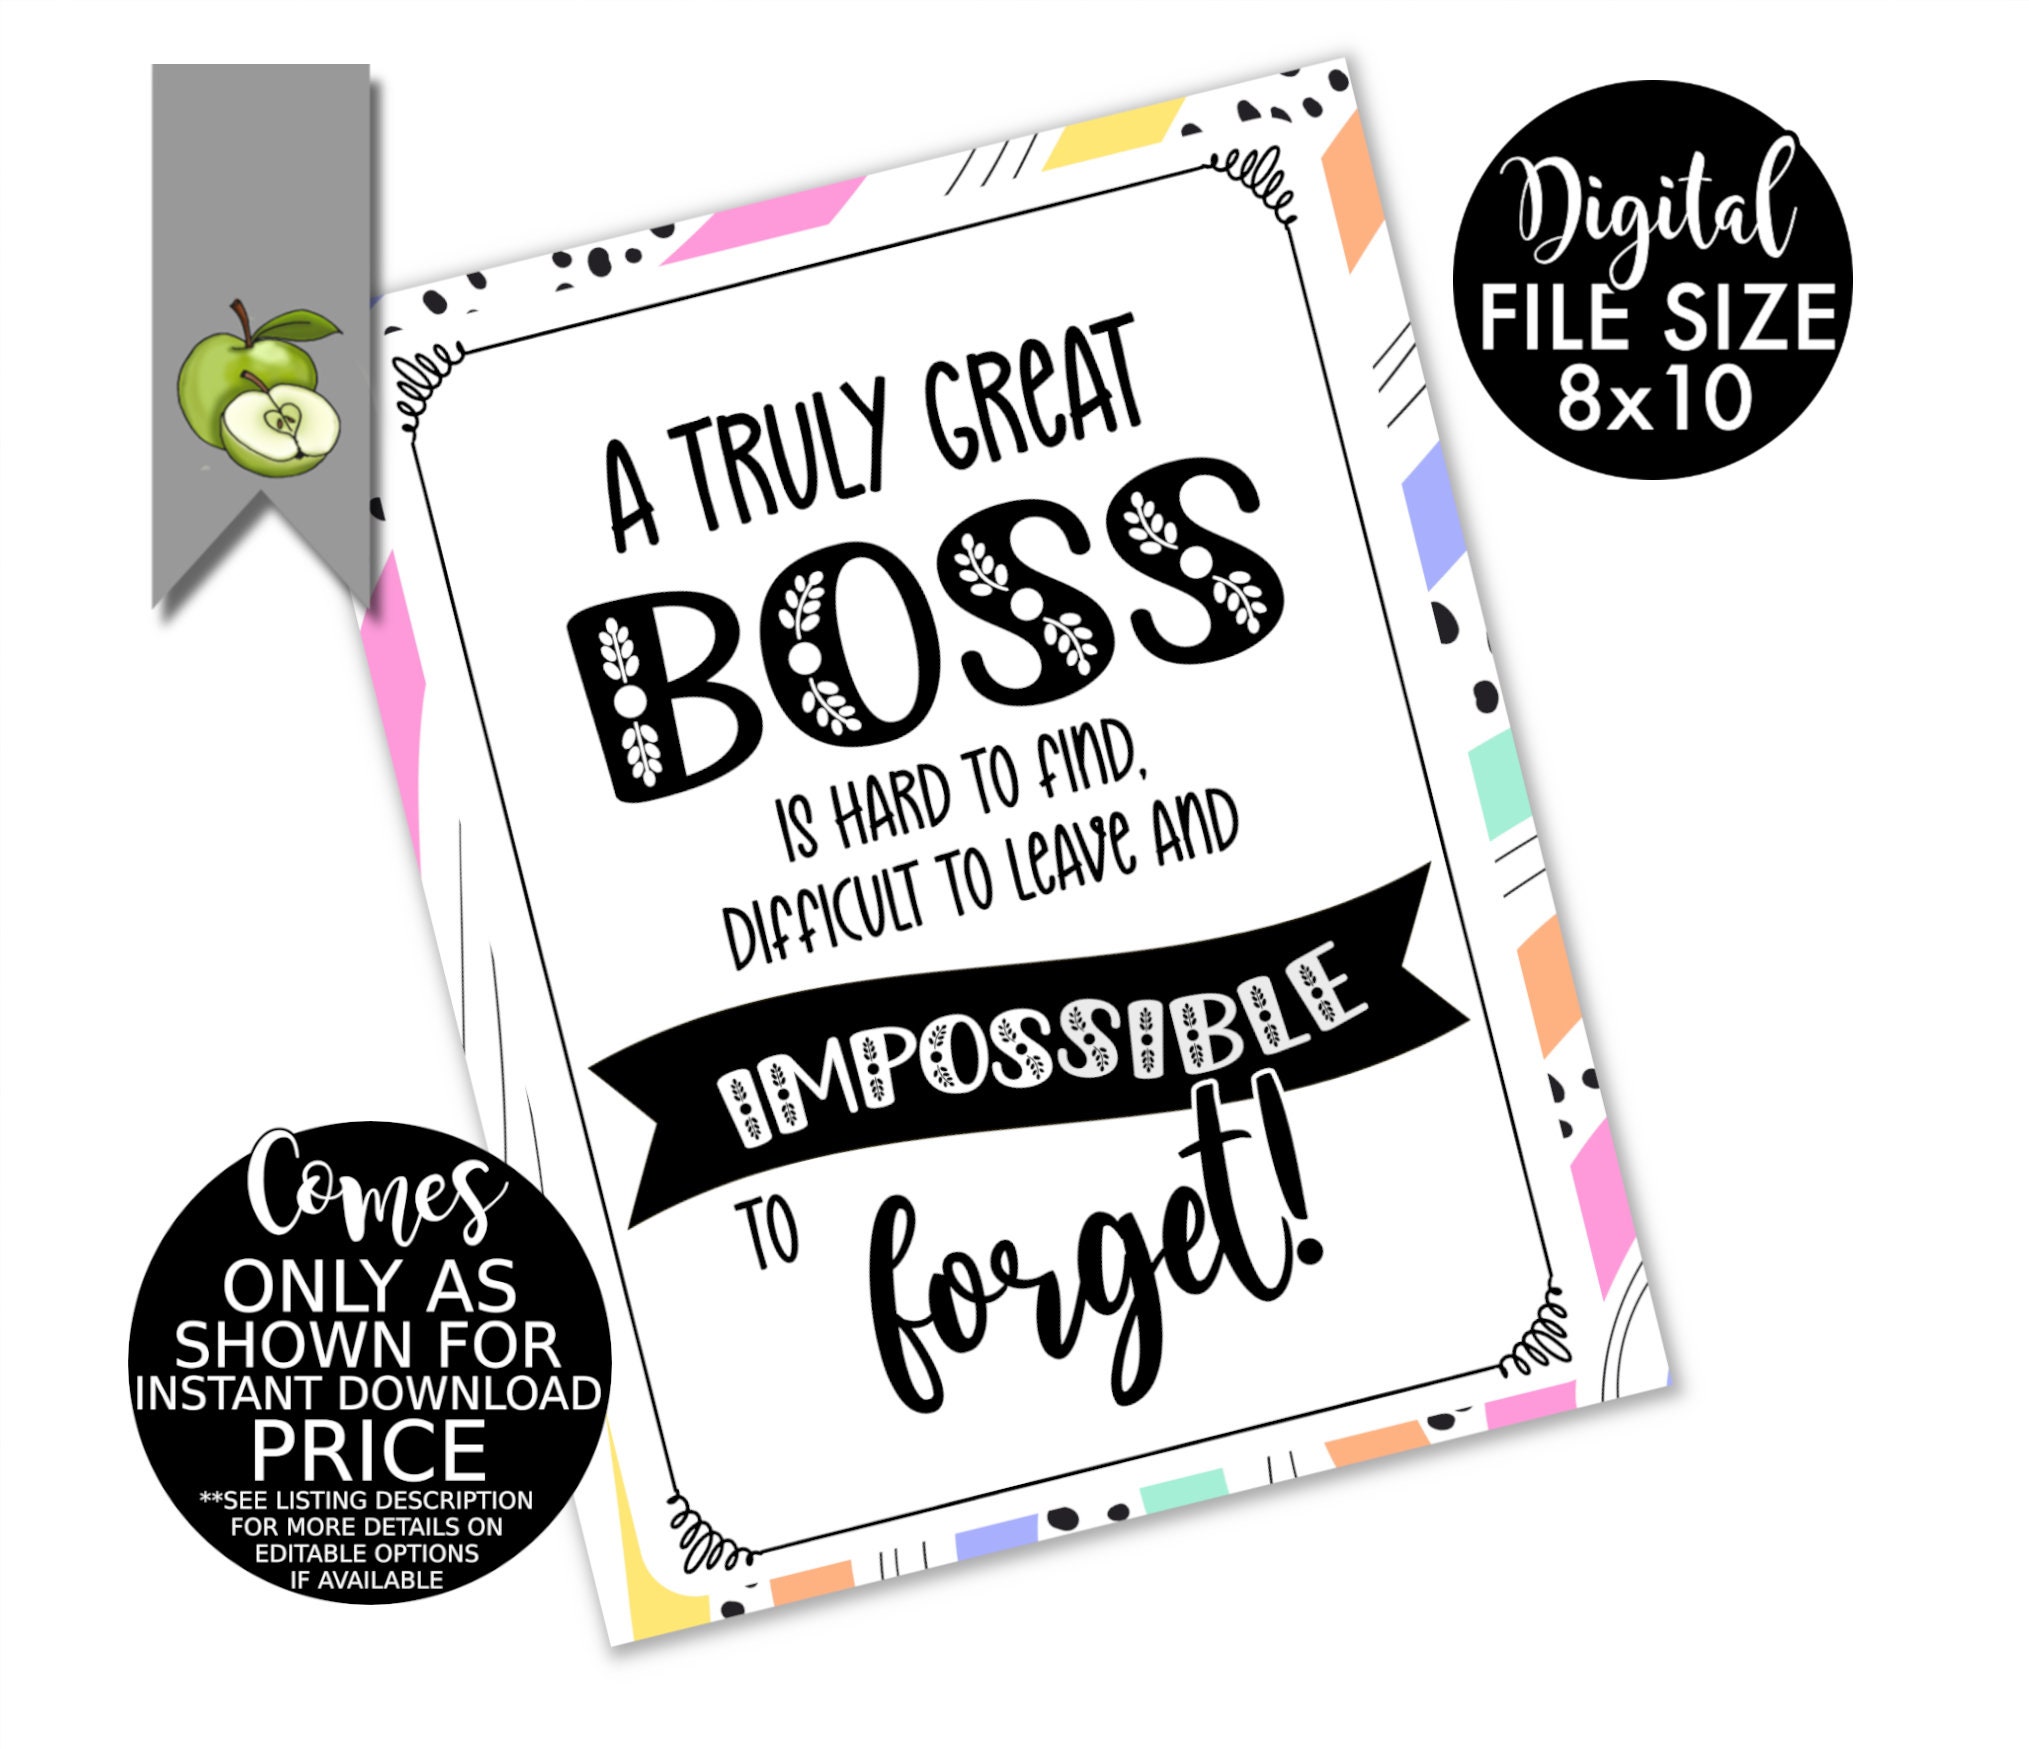 Final Installment of Boss' Day Cards - Designz By Gloria